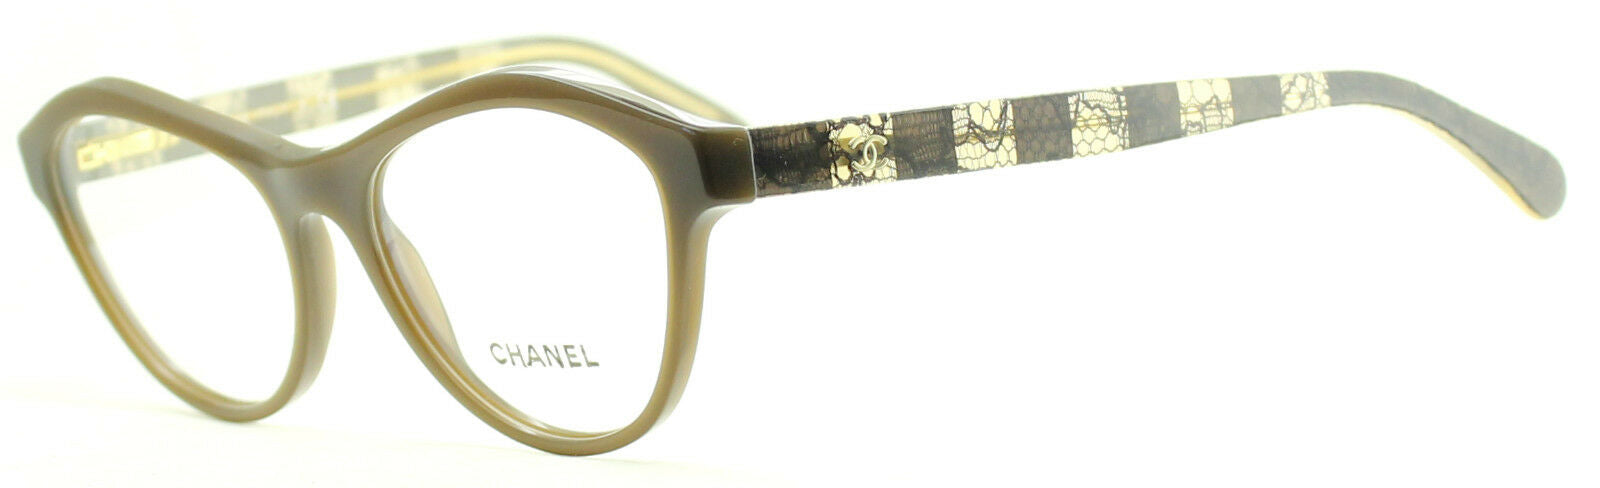 chanel mens eye glasses